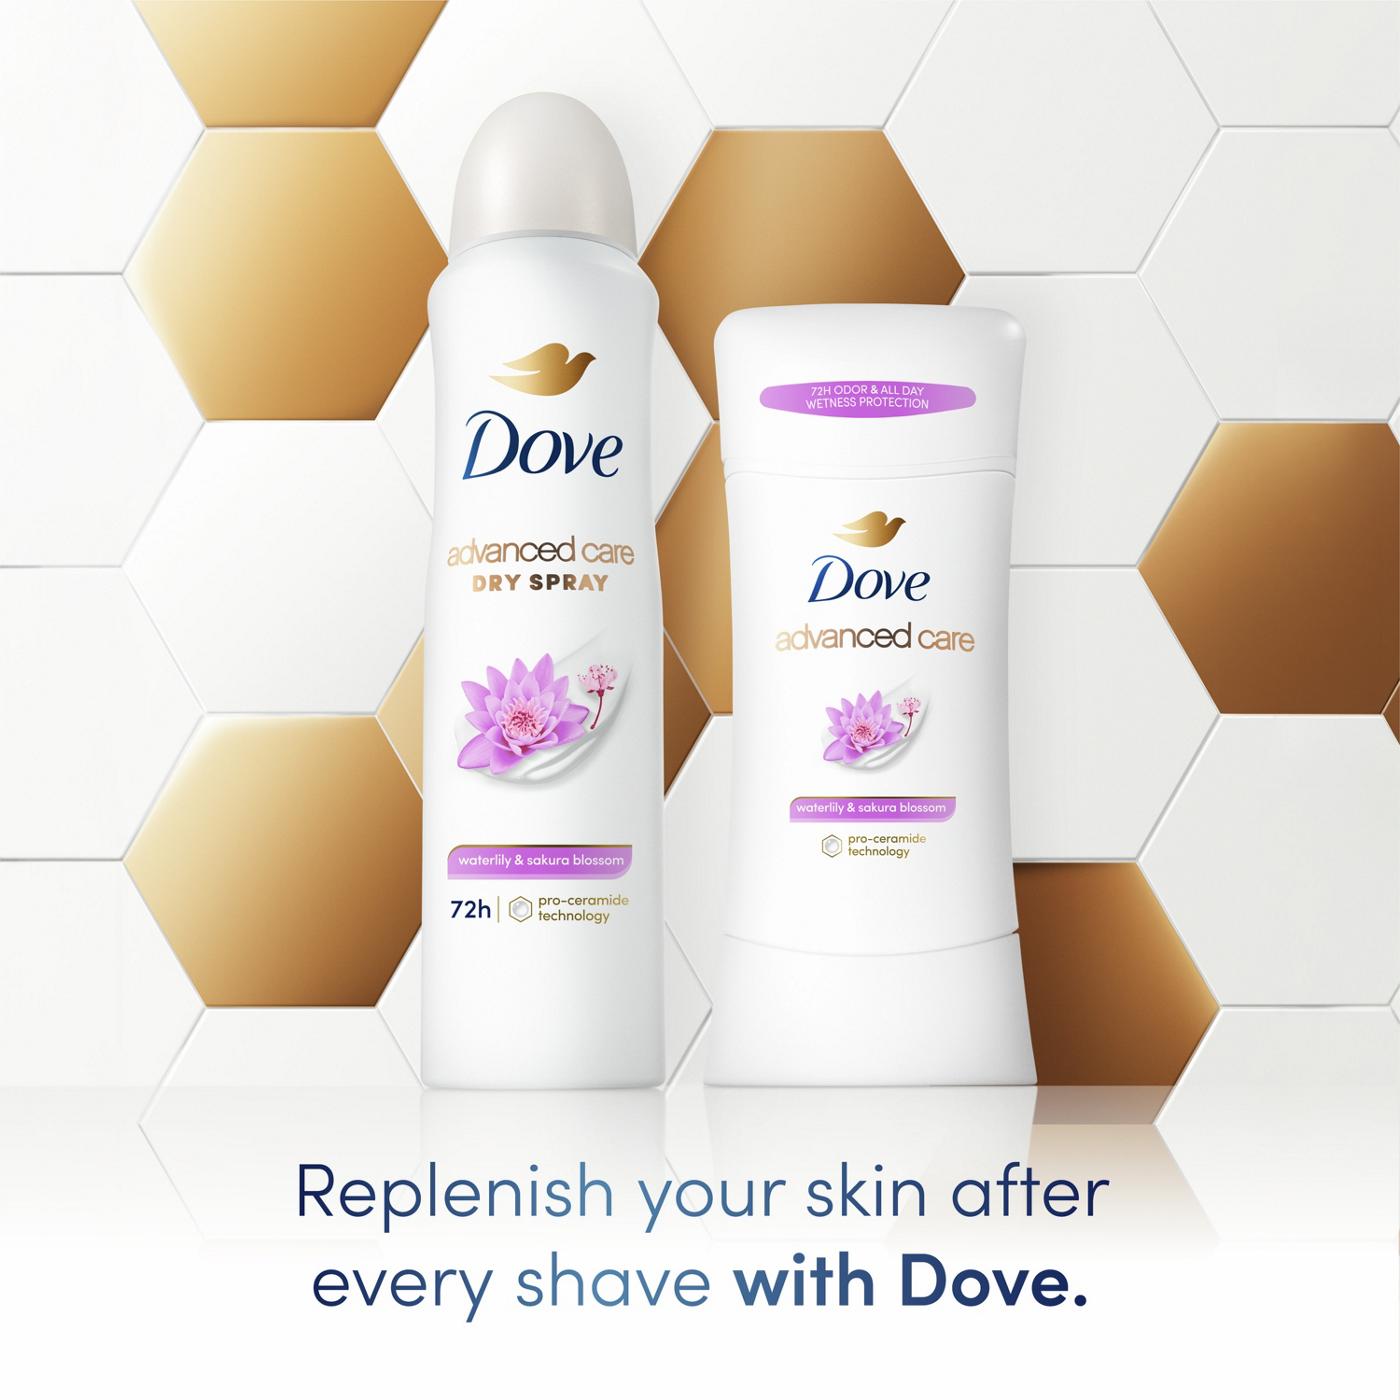 Dove Nourishing Secrets Waterlily & Sakura Blossom Dry Spray Antiperspirant Deodorant; image 3 of 7